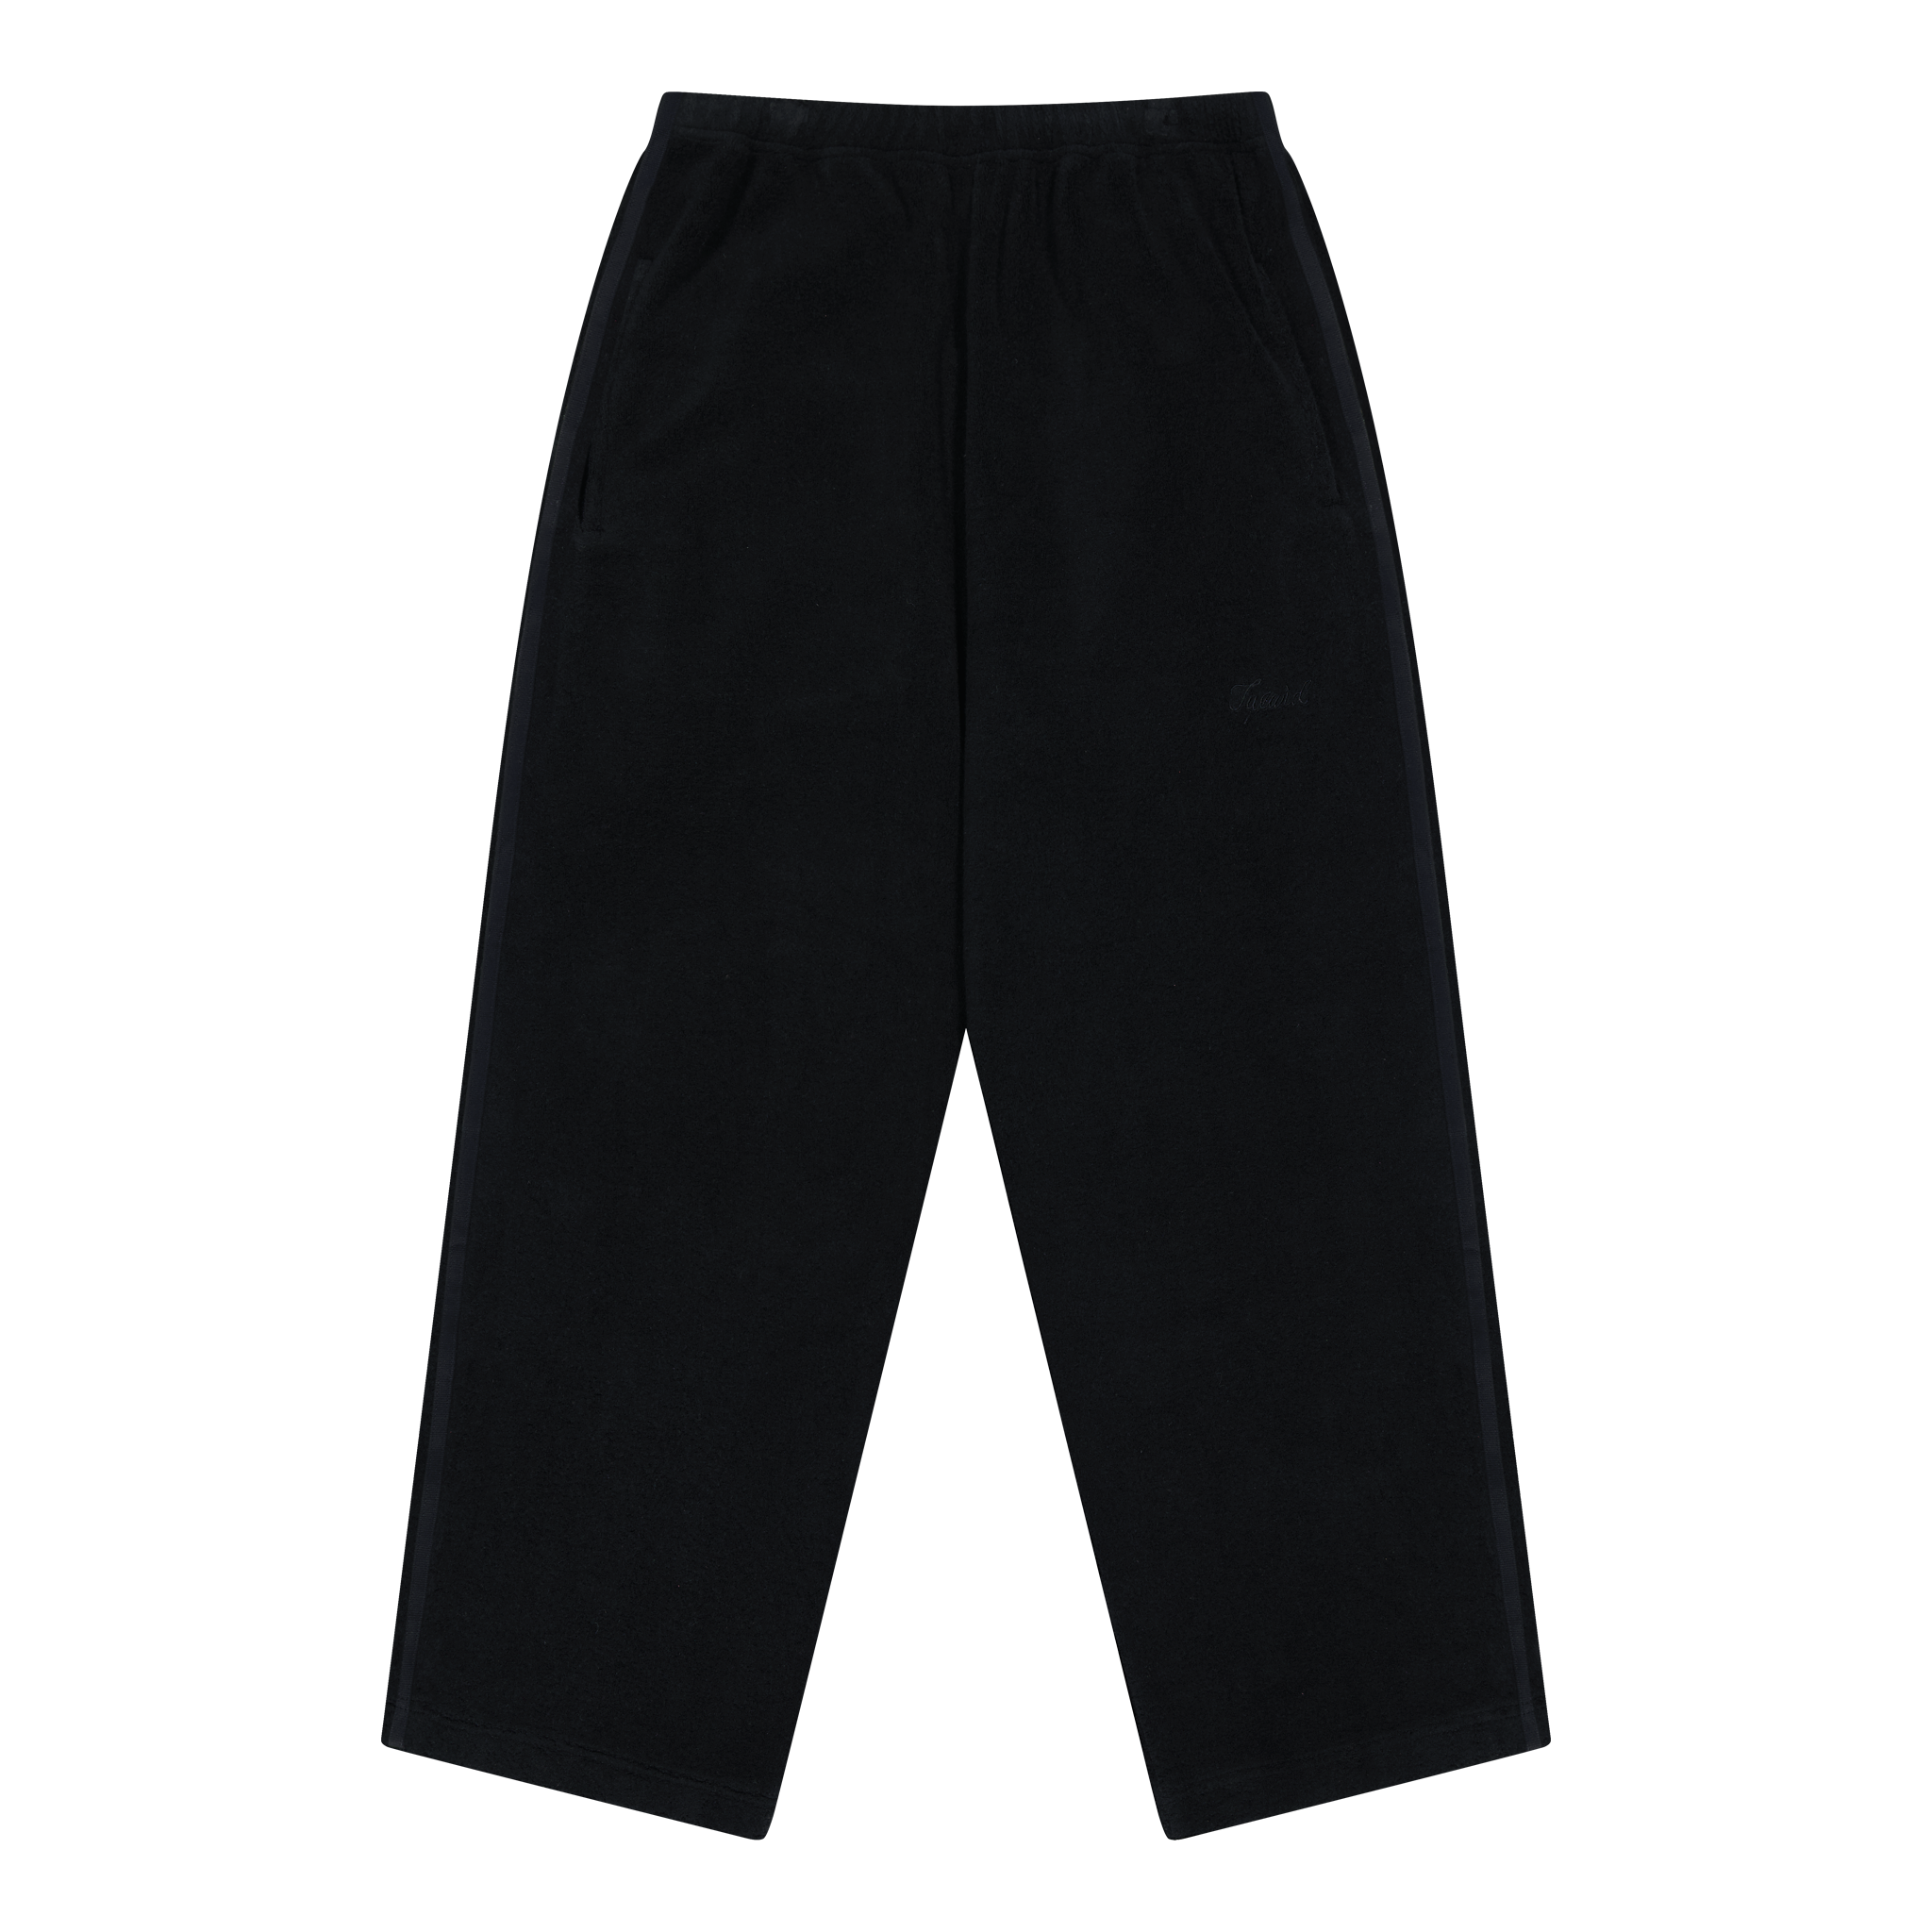 Tuewid retro sweatpants wide fit in black/black